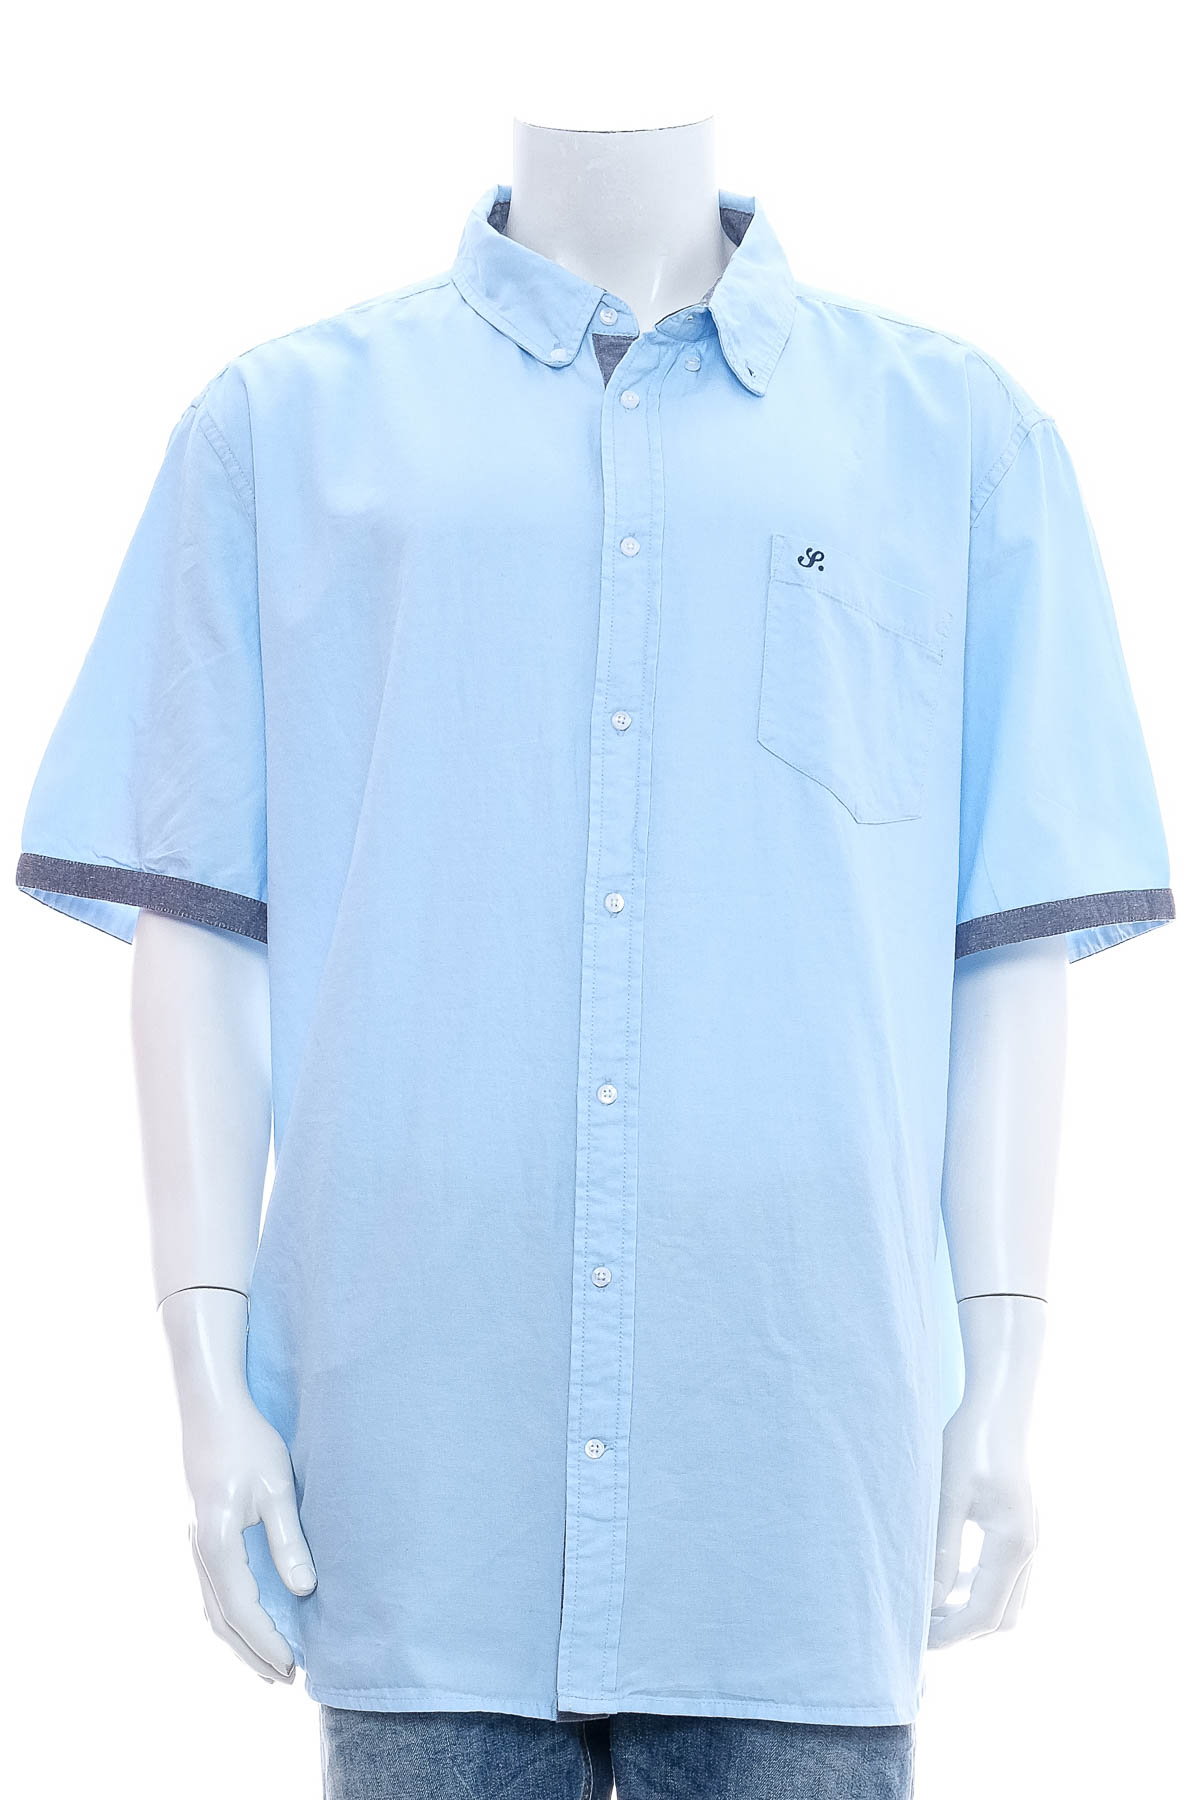 Men's shirt - Bpc selection bonprix collection - 0